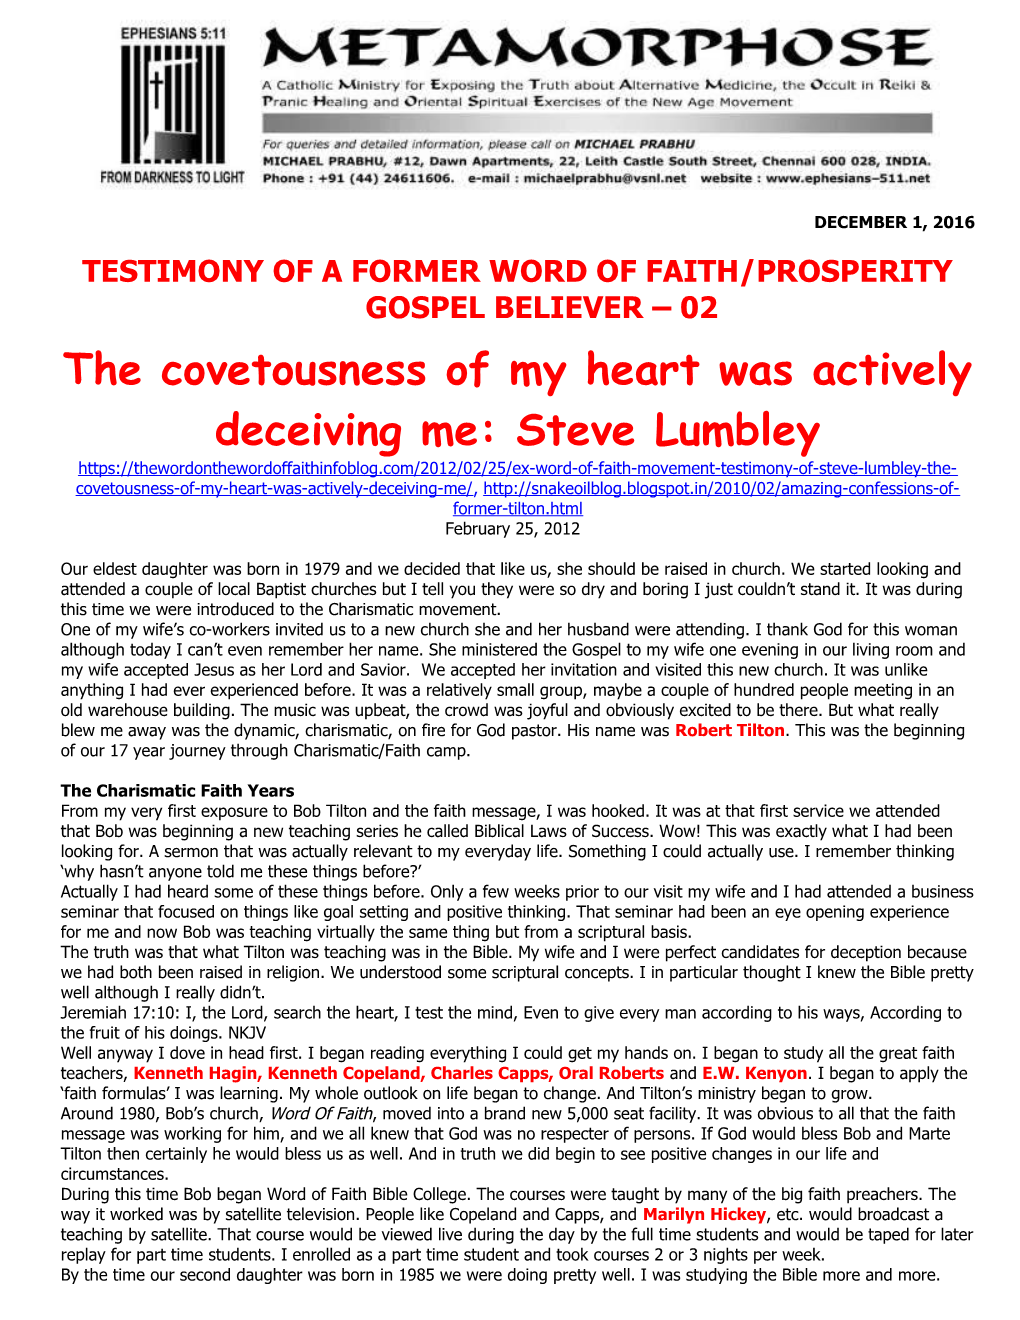 Testimony of a Formerword of Faith/Prosperity Gospel Believer 02